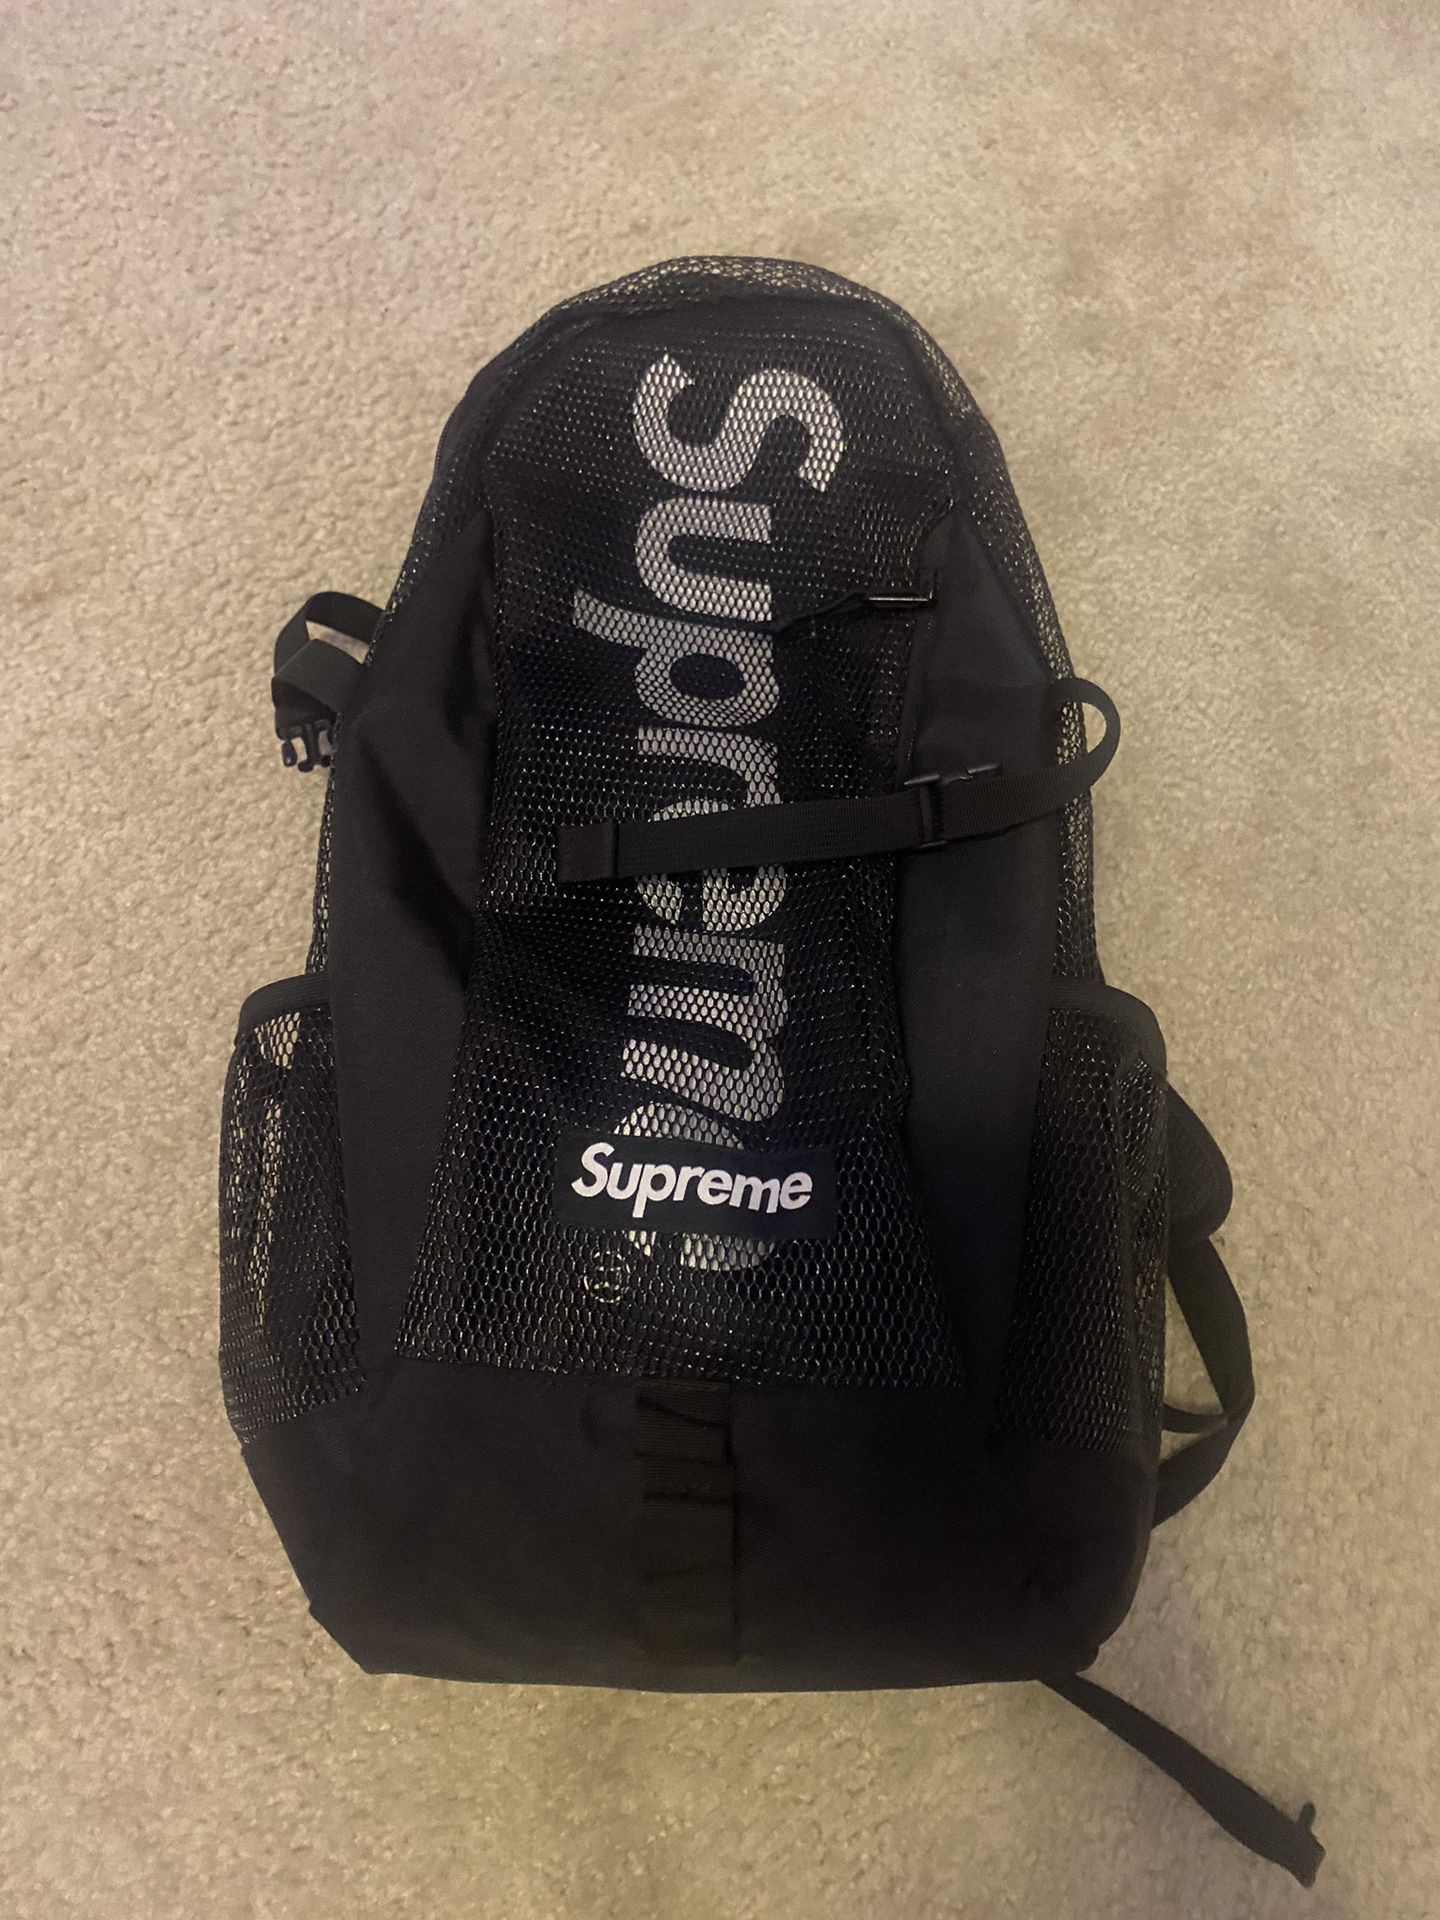 Black Supreme Backpack NOT USED